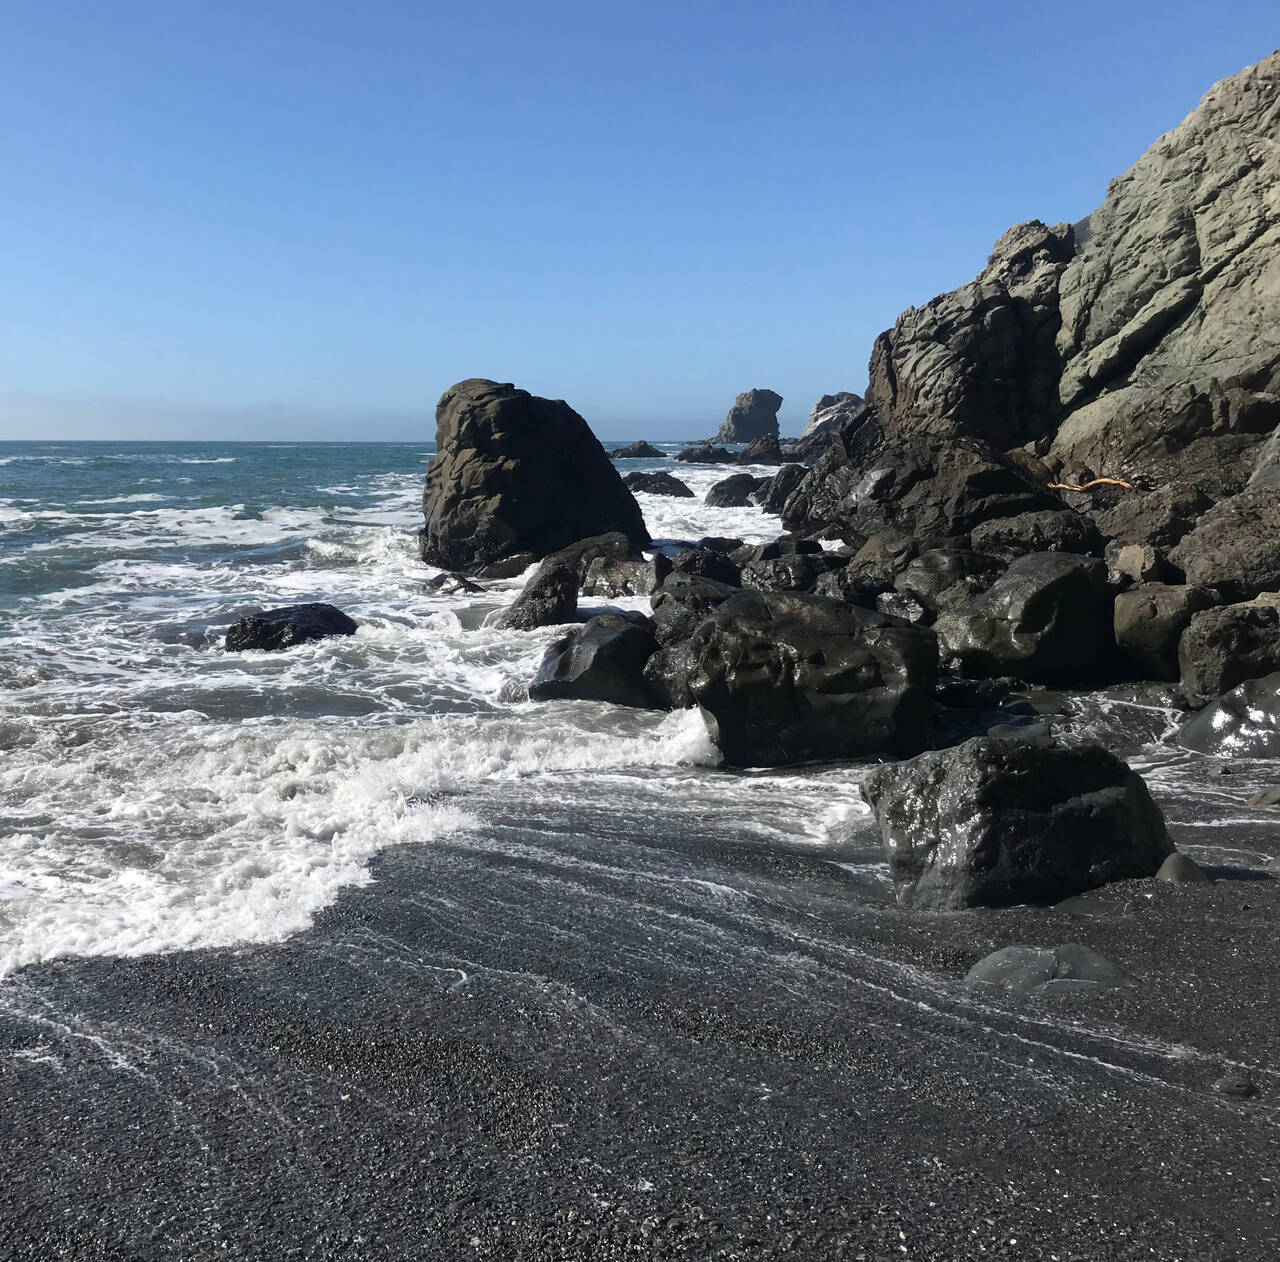 Waves recede after crashing against rocks on a black sand beach